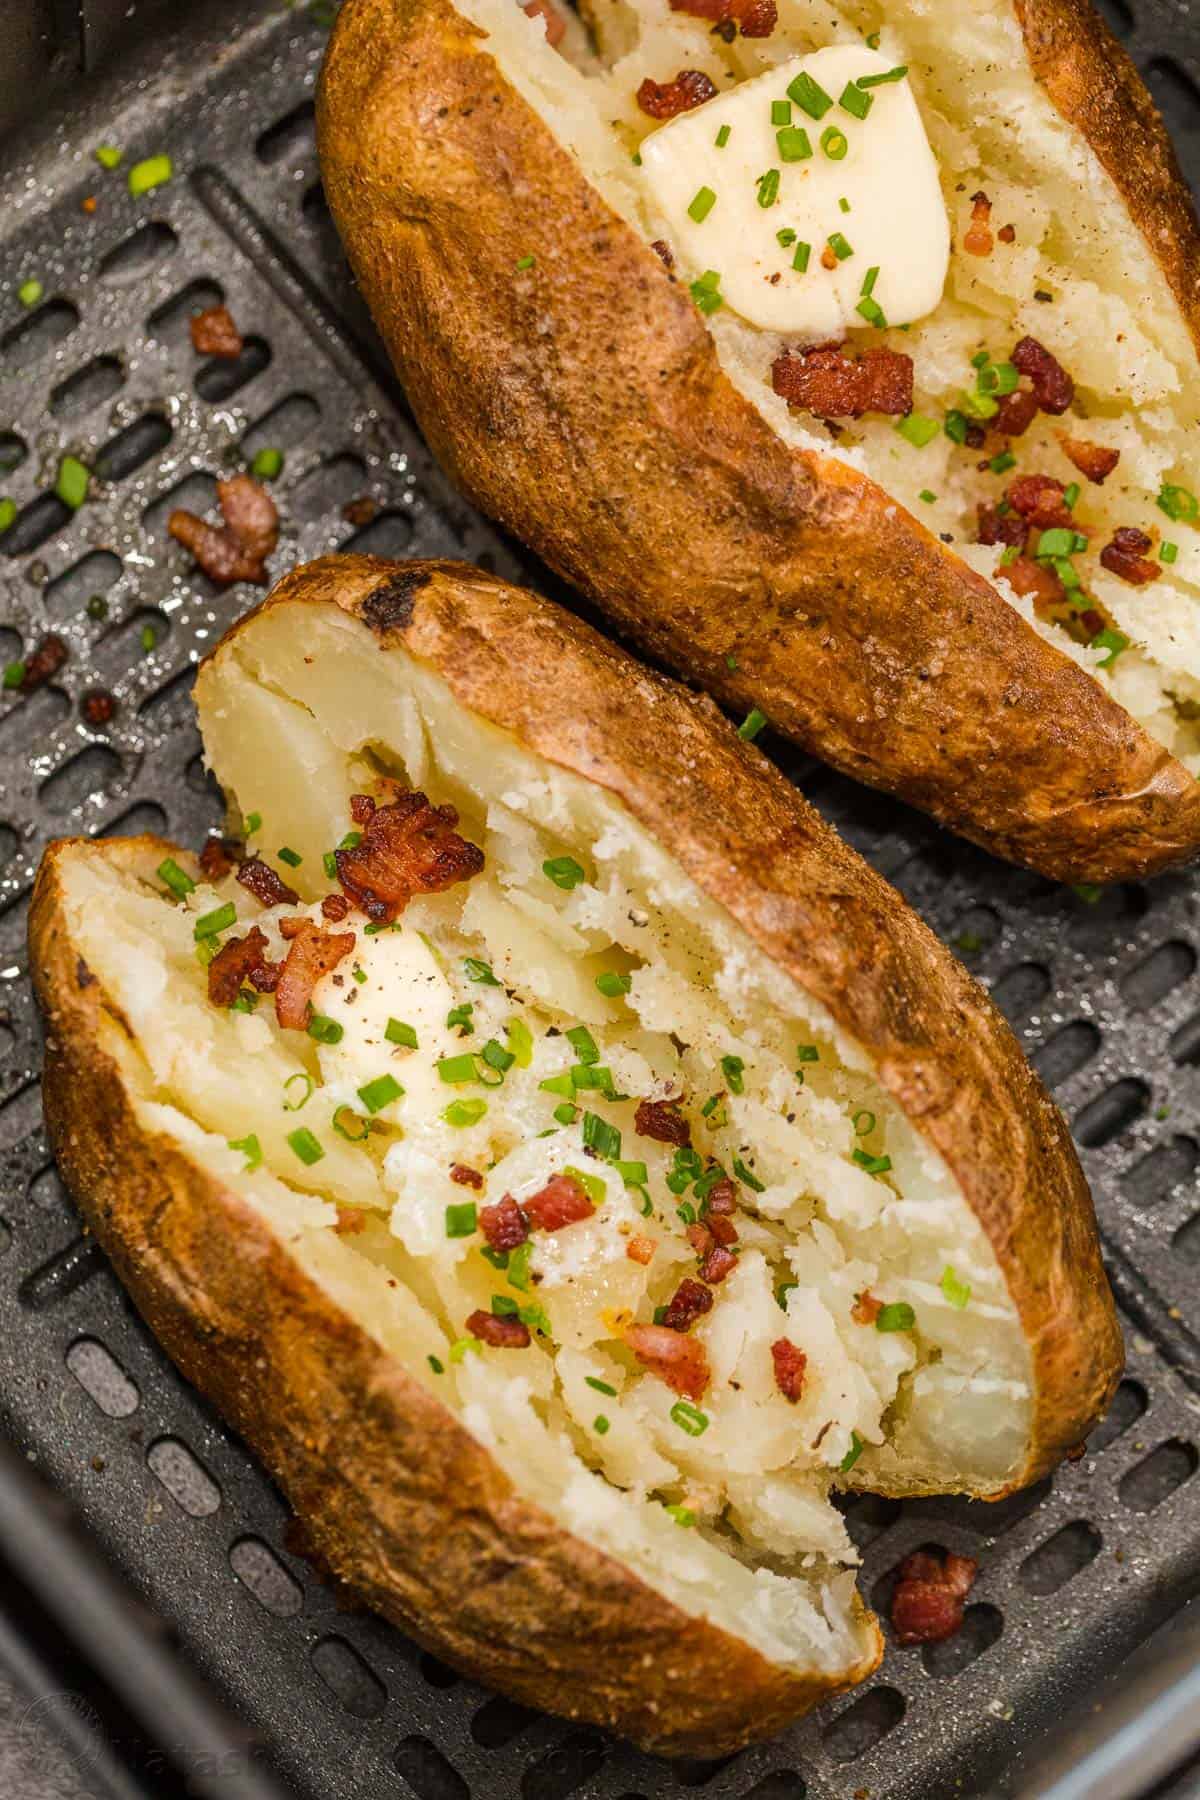 Fail proof air fryer baked potatoes